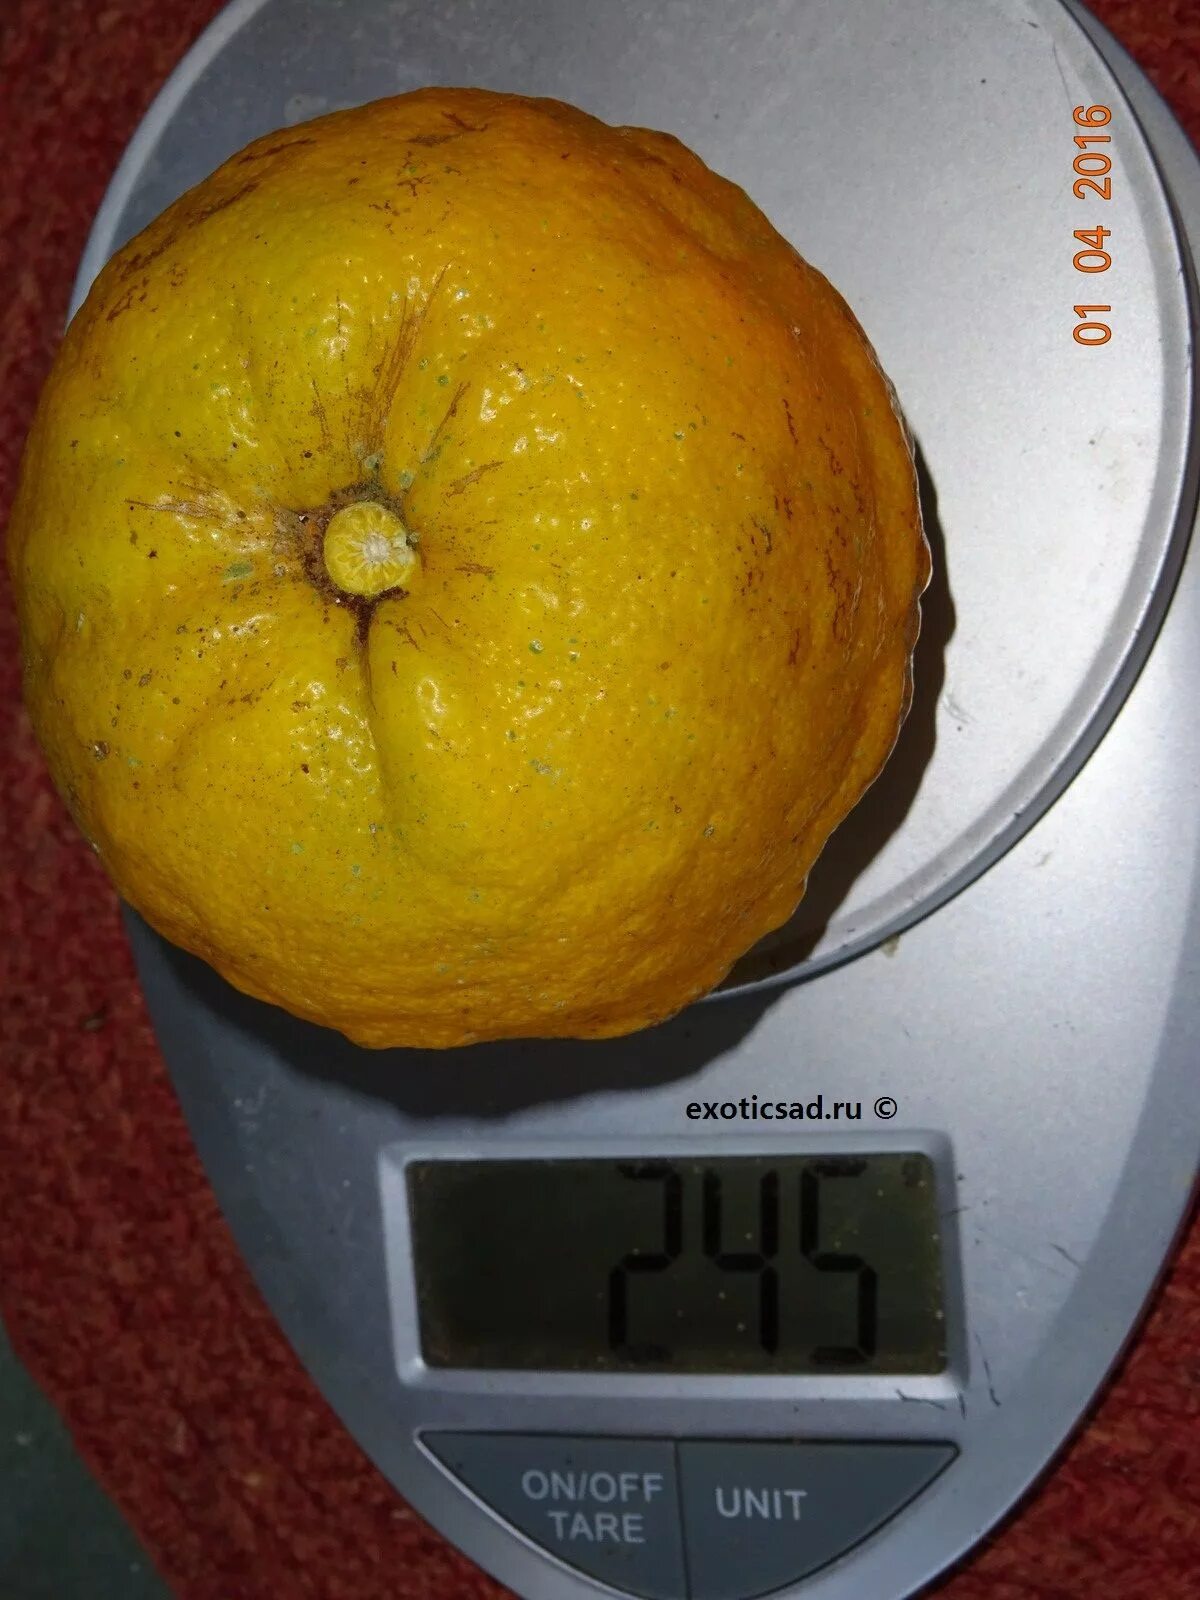 Калории в 1 мандарине шт без кожуры. Мандарин вес 1 шт без кожуры. Апельсины, вес. Апельсин грамм. Масса апельсина.